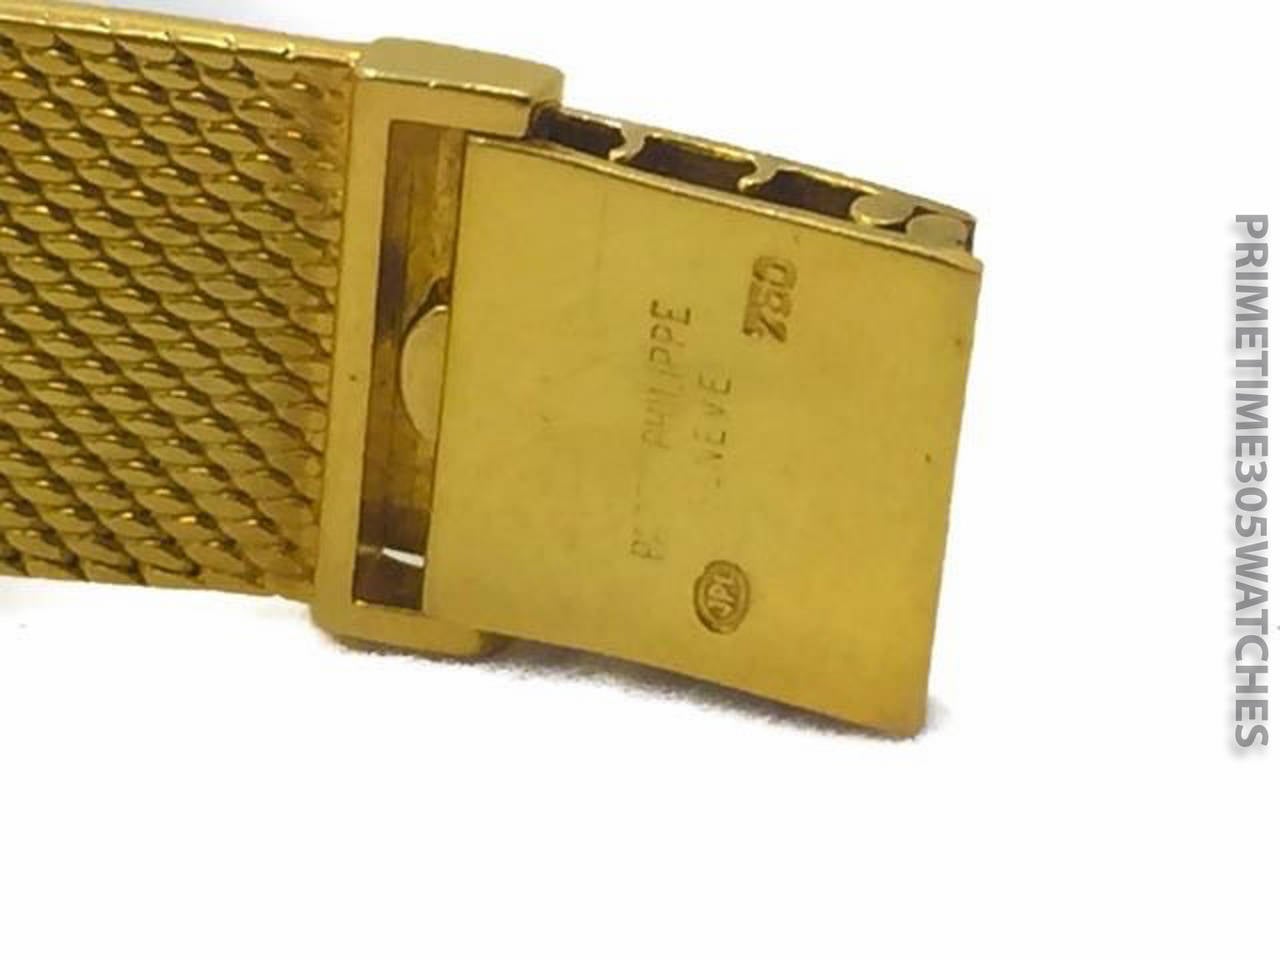 Mens Patek Philippe 18k Yellow Gold Automatic Watch On Bracelet, Ref 3563/3 2